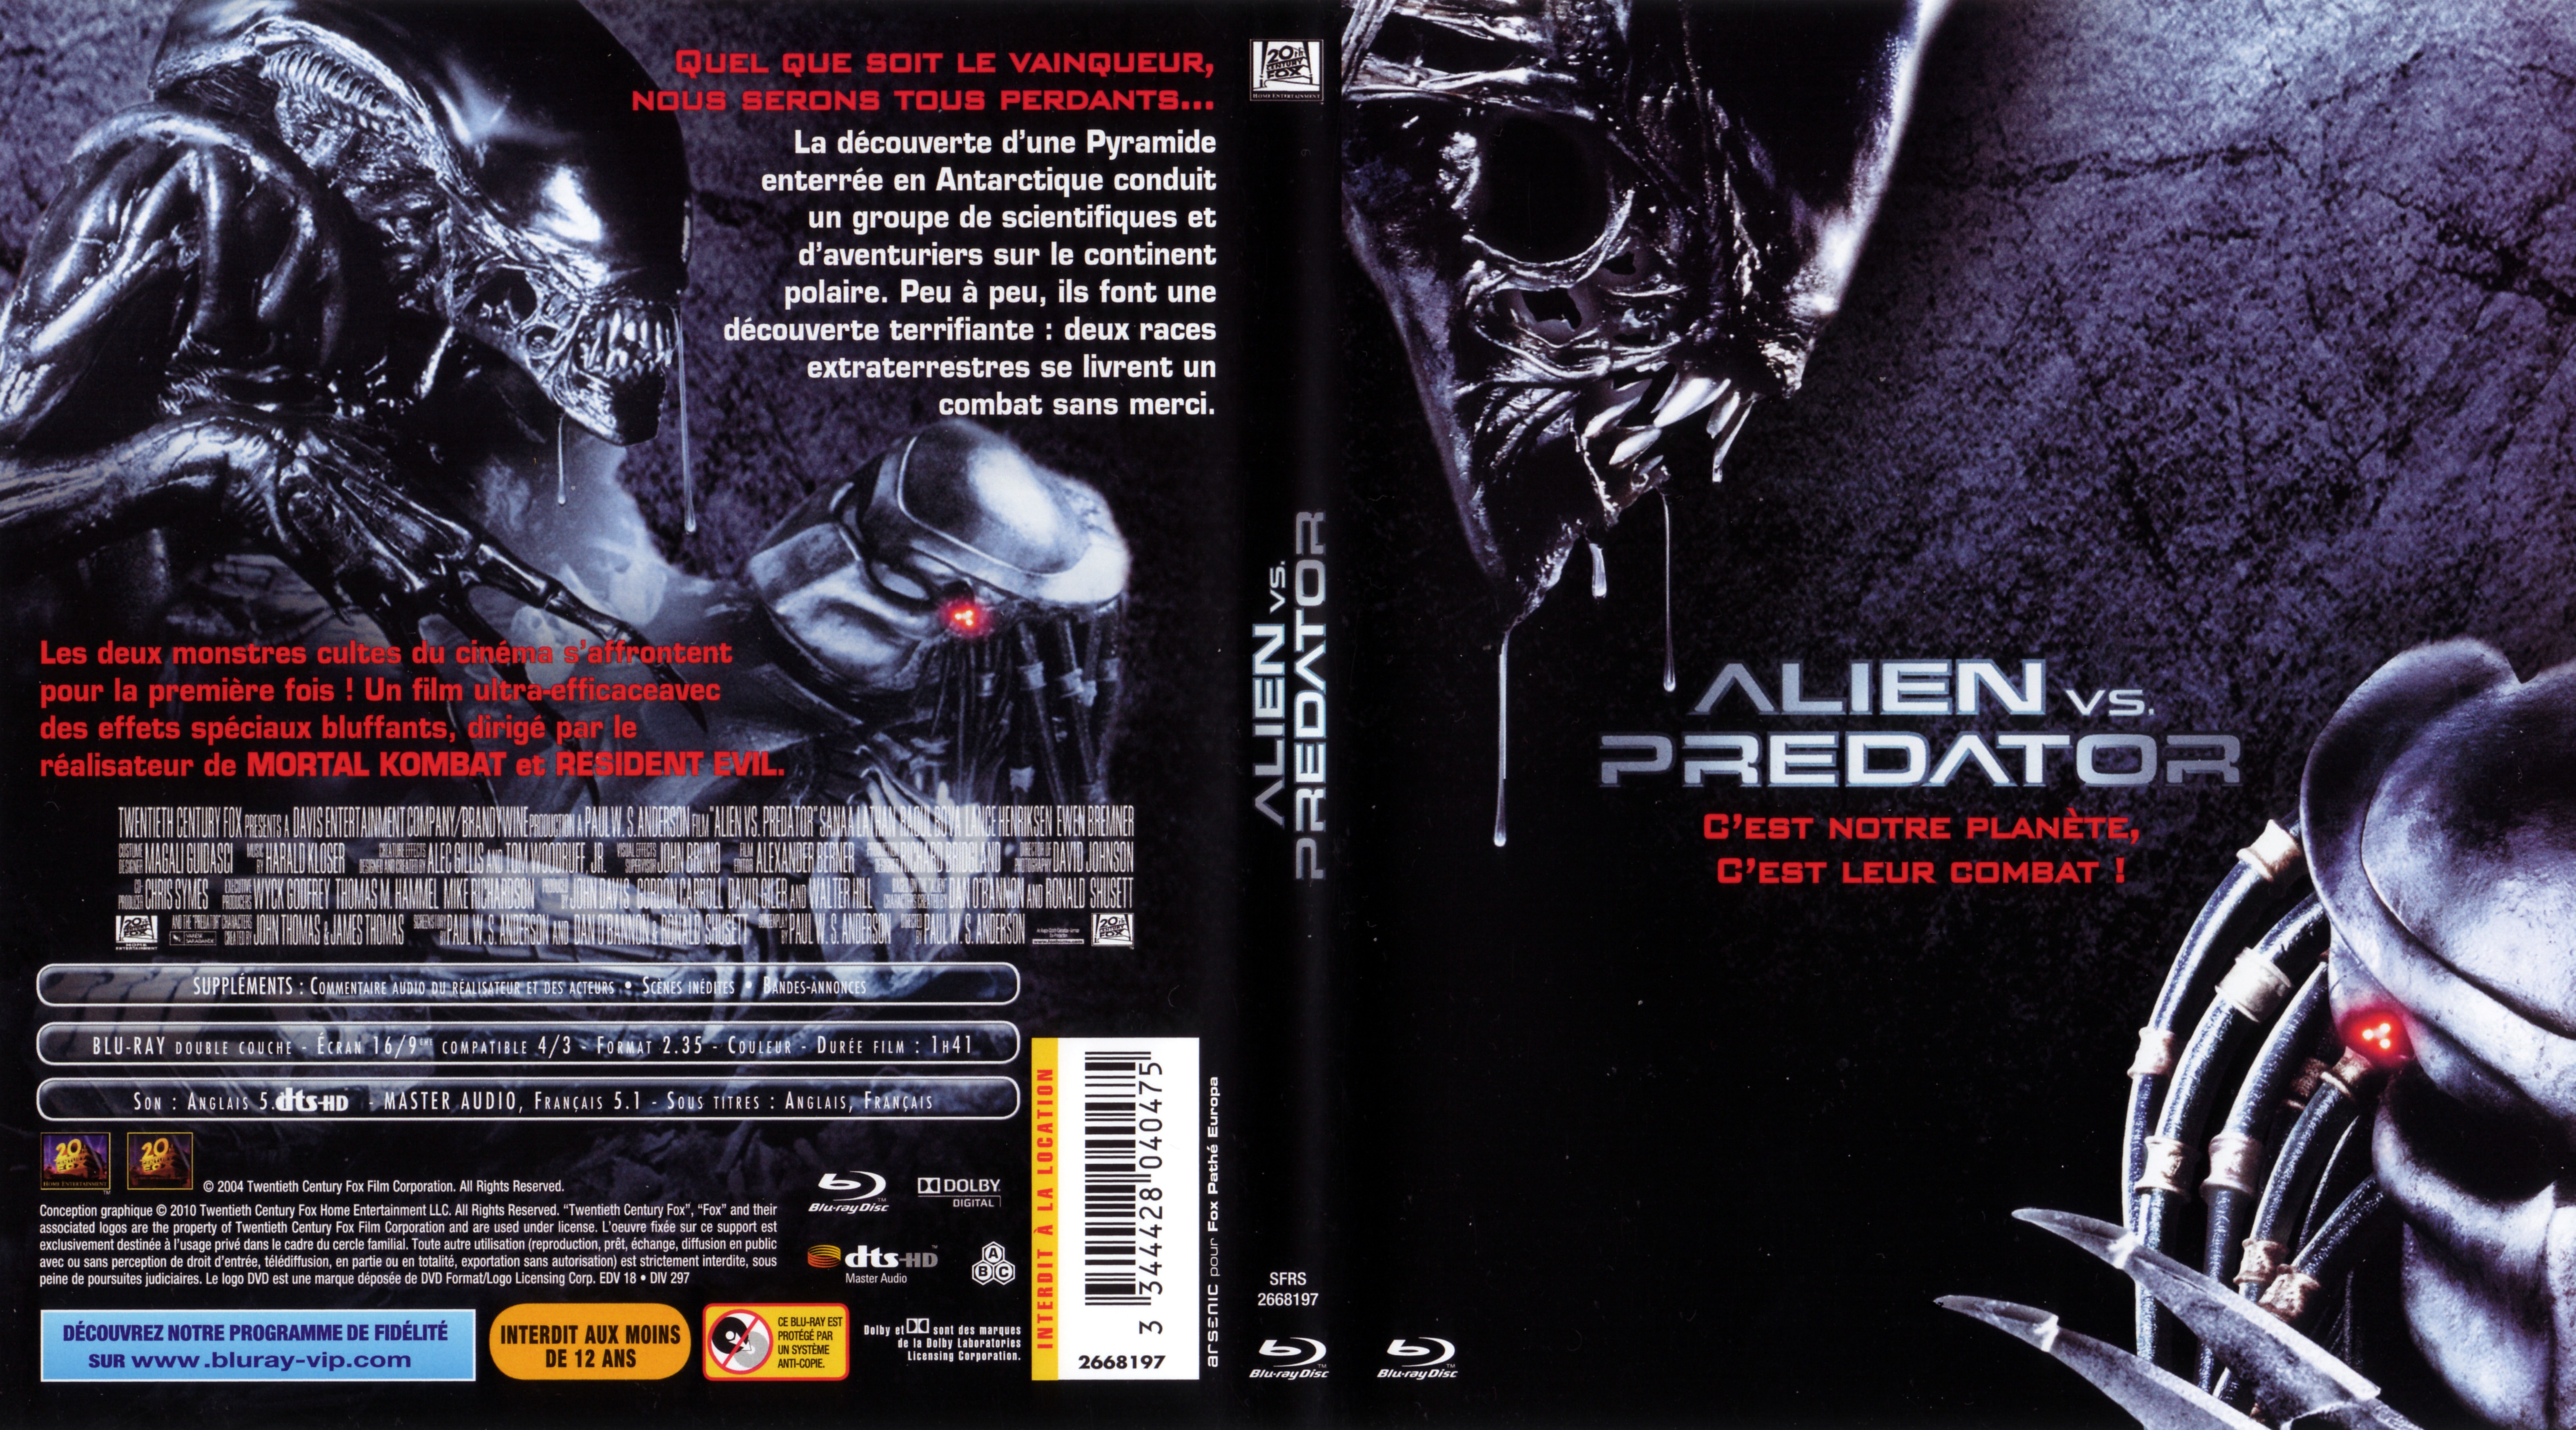 Jaquette DVD Alien VS Predator (BLU-RAY) v2